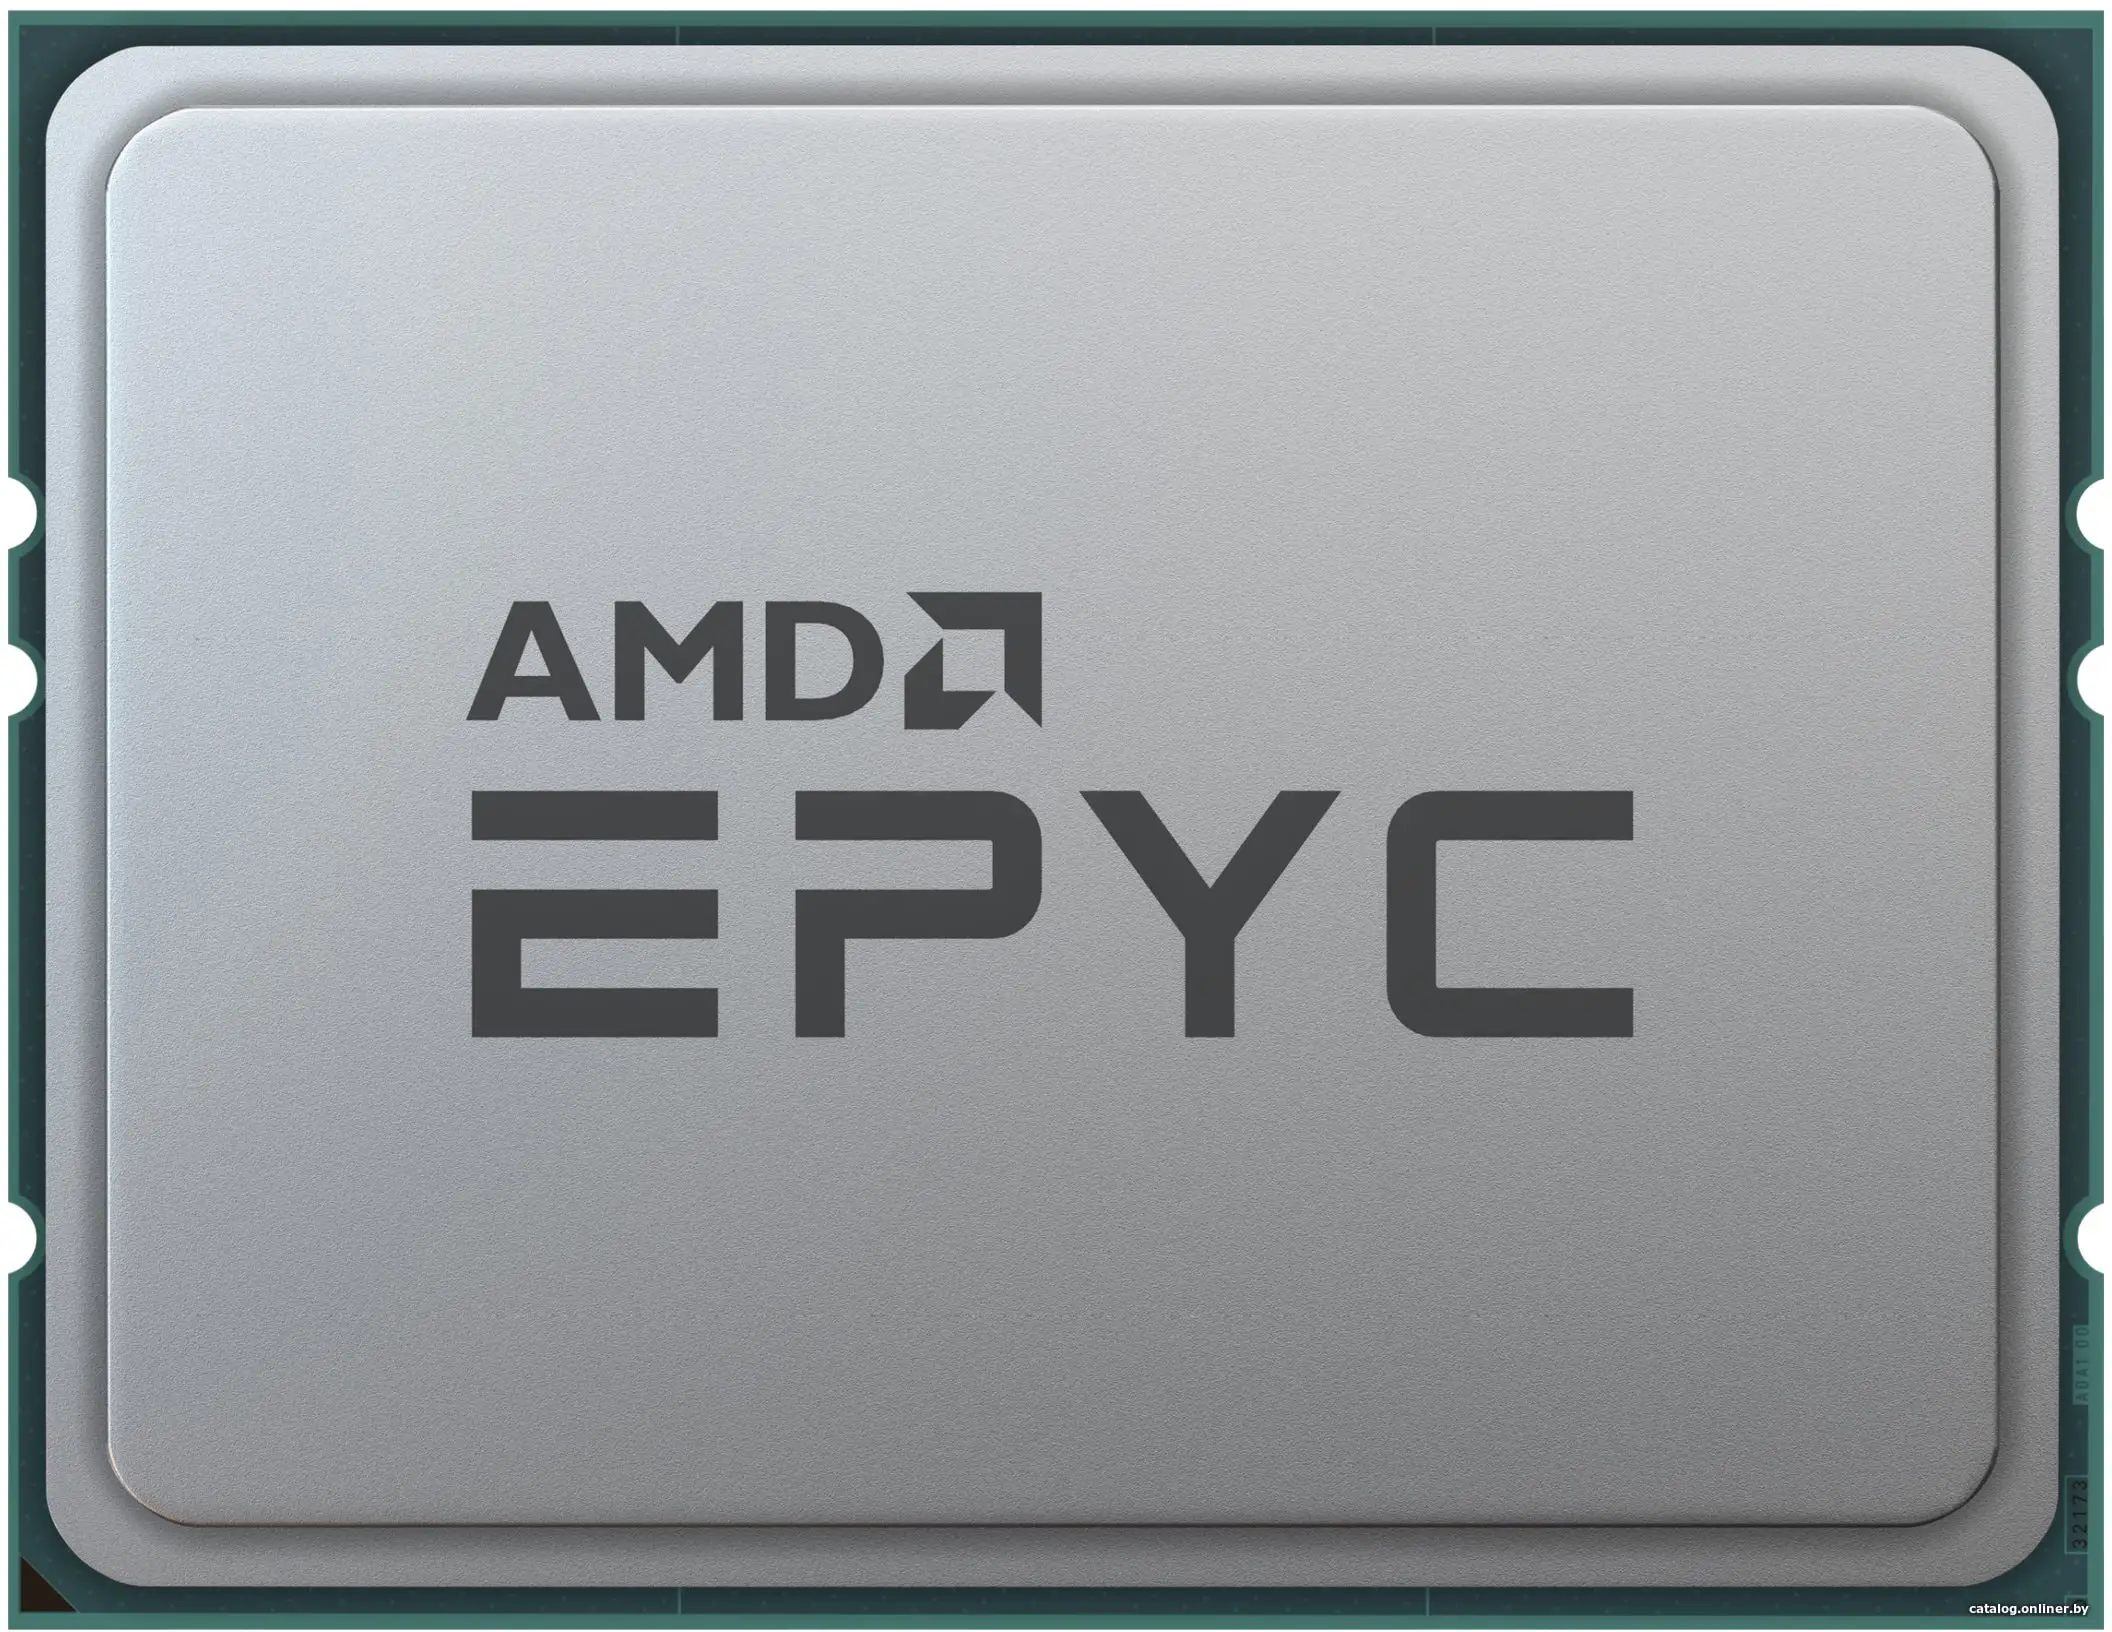 Процессор AMD Epyc 7643 Tray